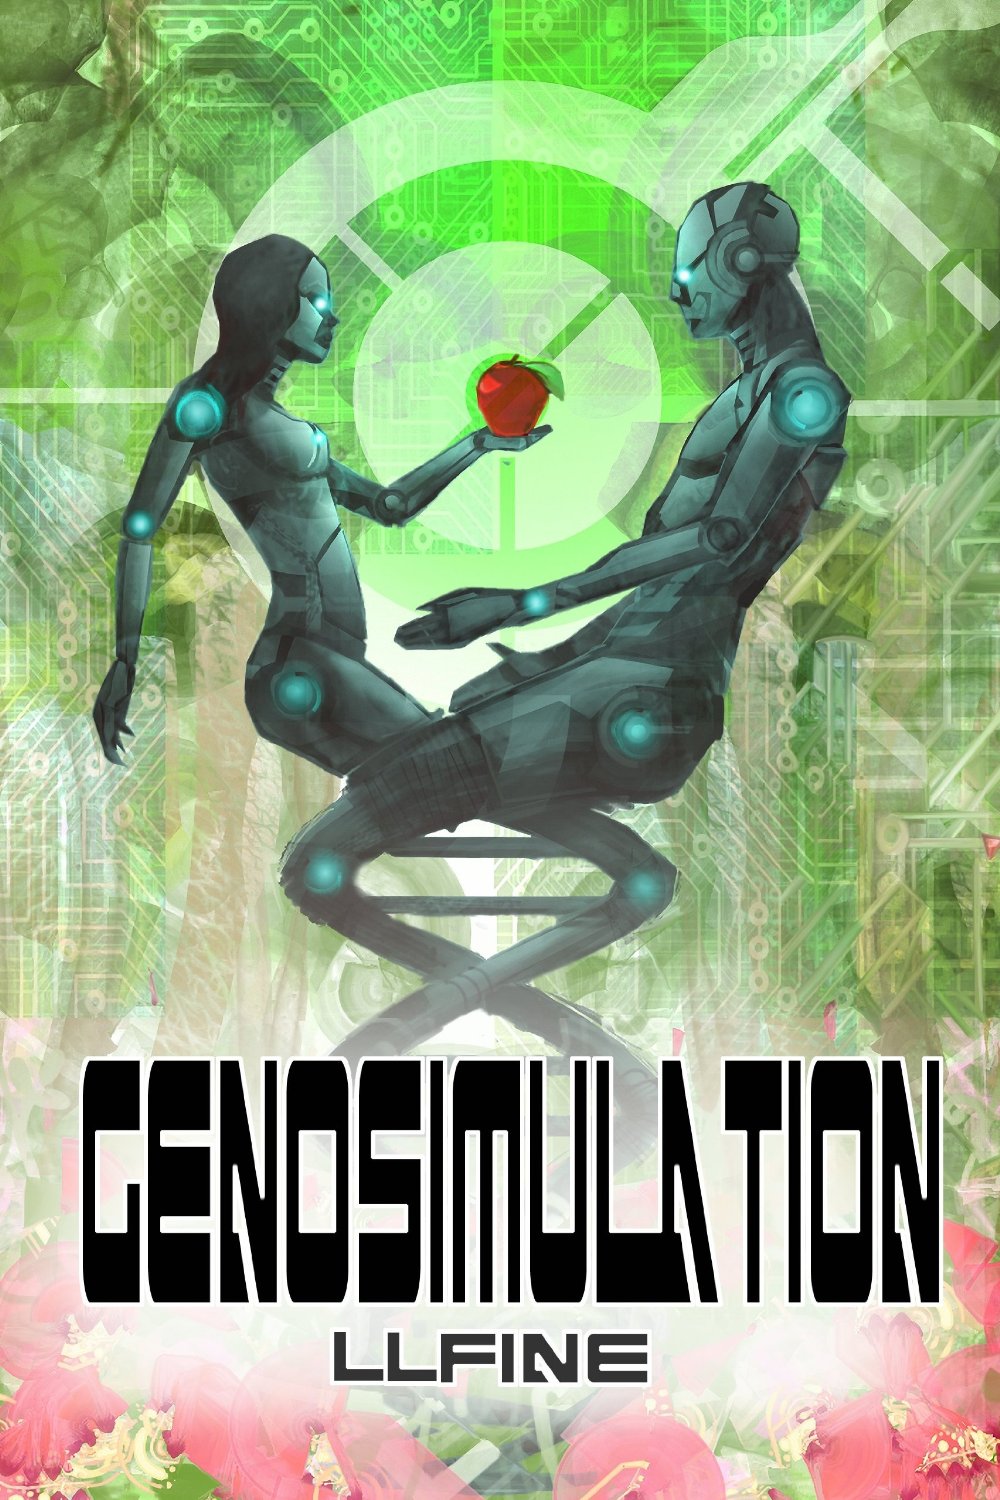 Genosimulation by Liron Fine